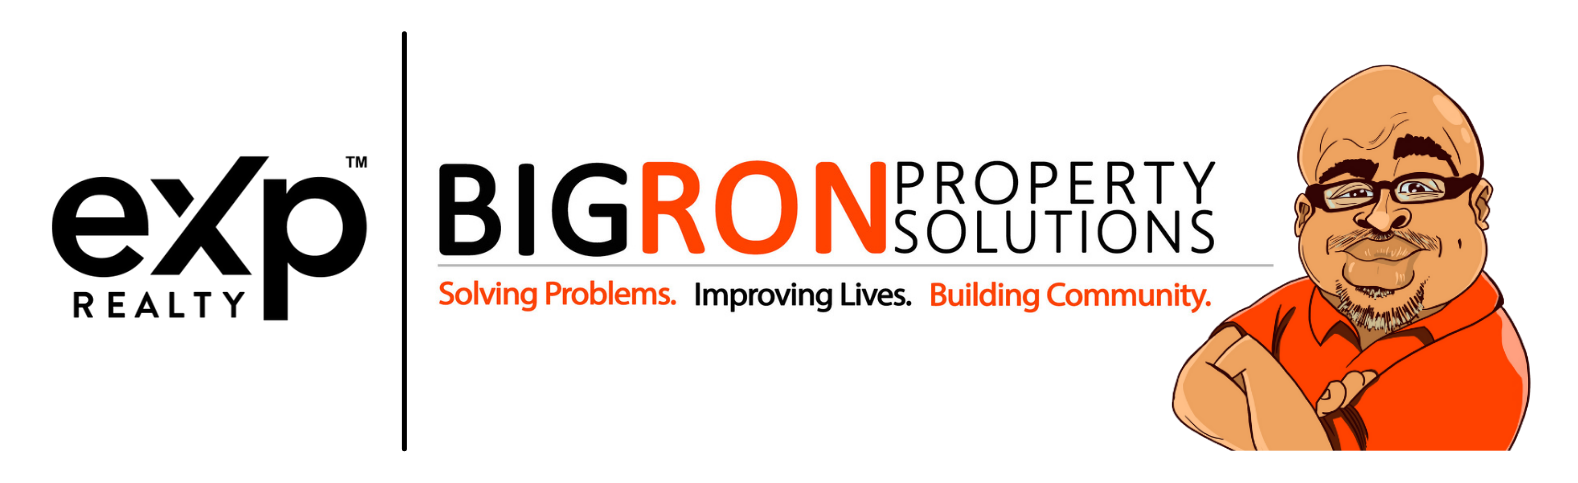 Big Ron Property Solutions logo